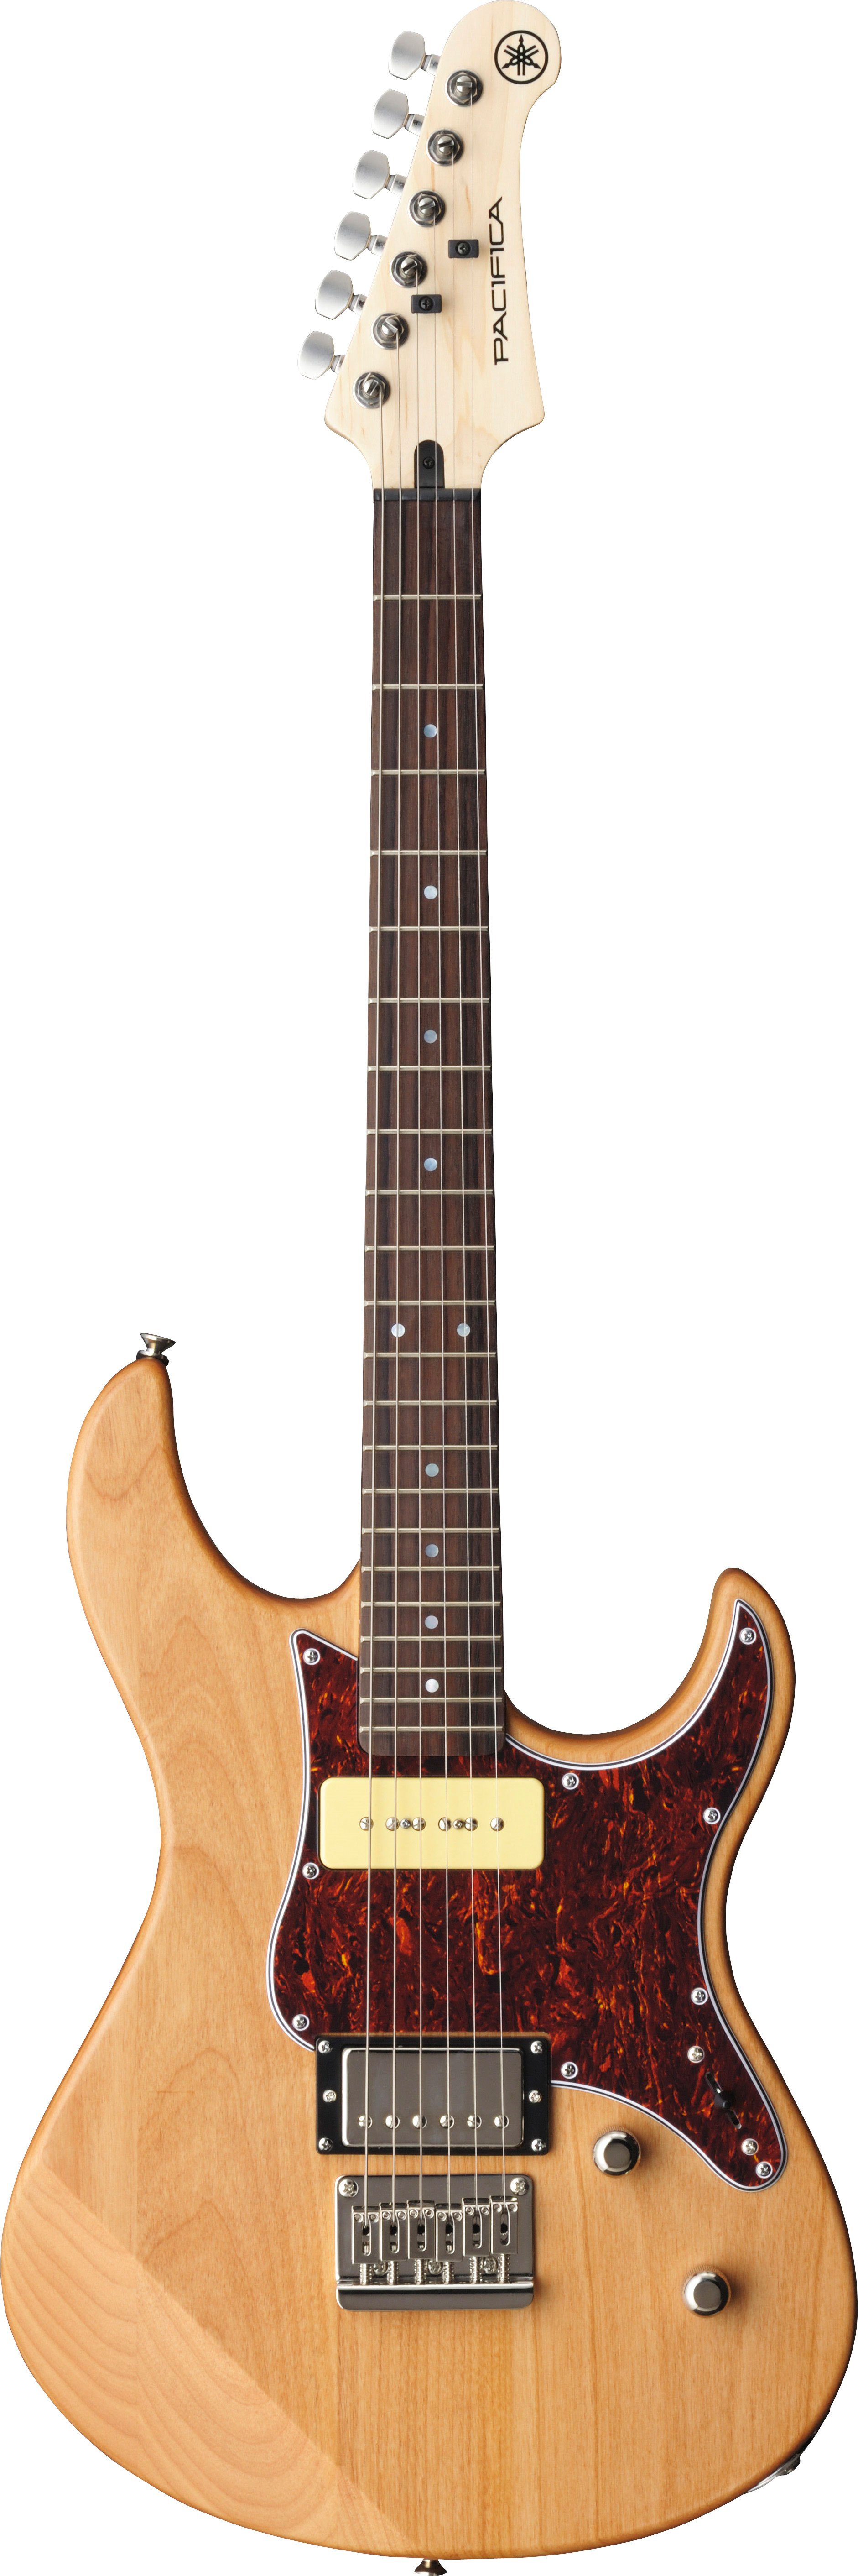 Yamaha Pacifica Pac311h - Natural Satin - Guitarra eléctrica con forma de str. - Variation 4